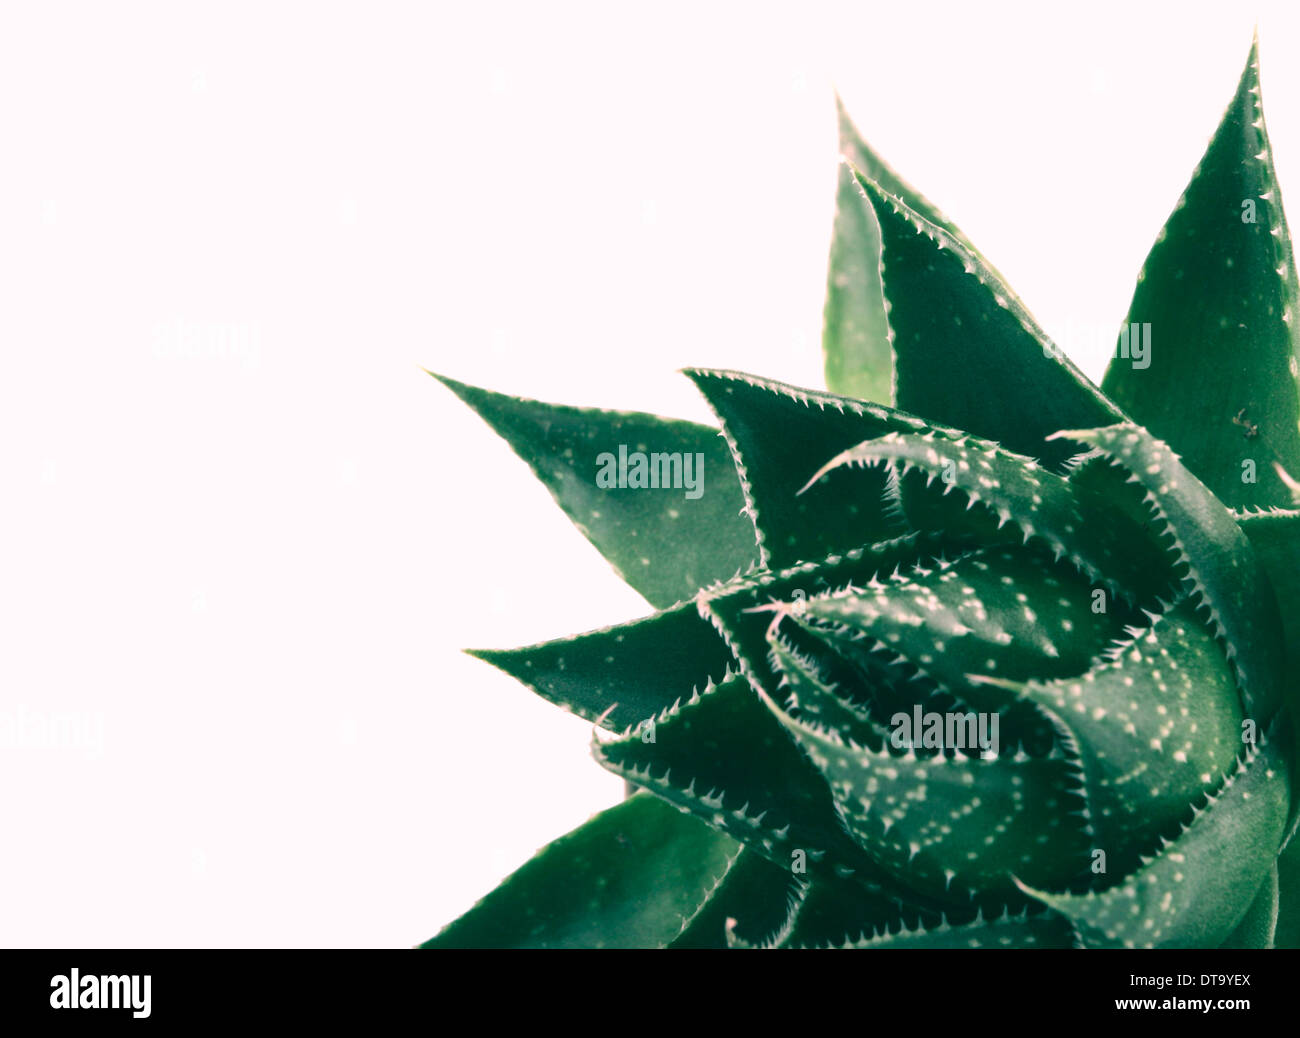 Aloe vera plant isolated on white Stock Photo